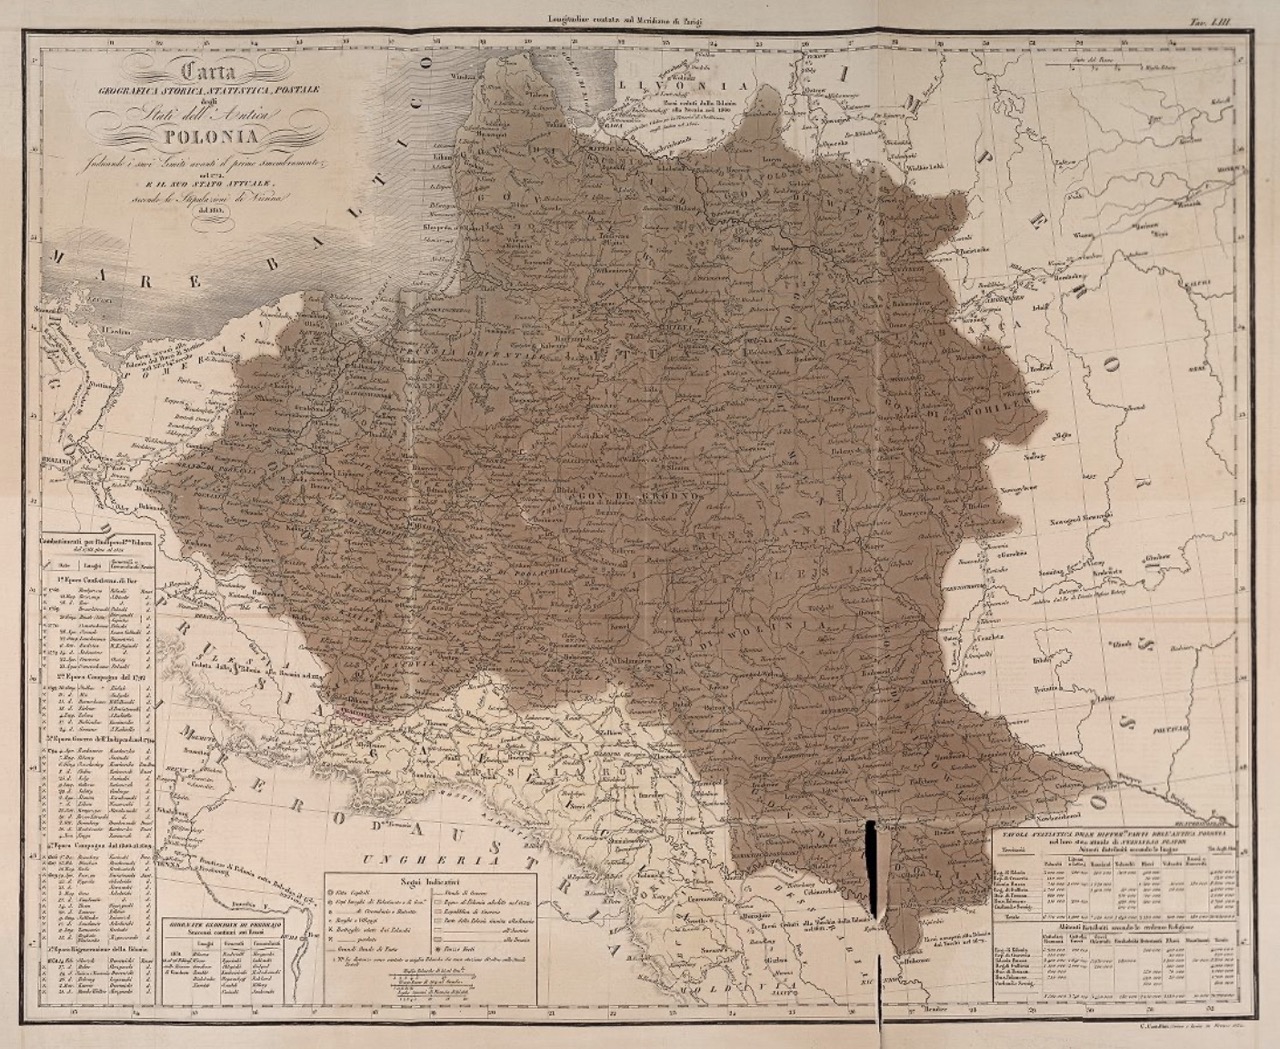 Marmocchi: Atlante Geografia 1838, "Polonia"